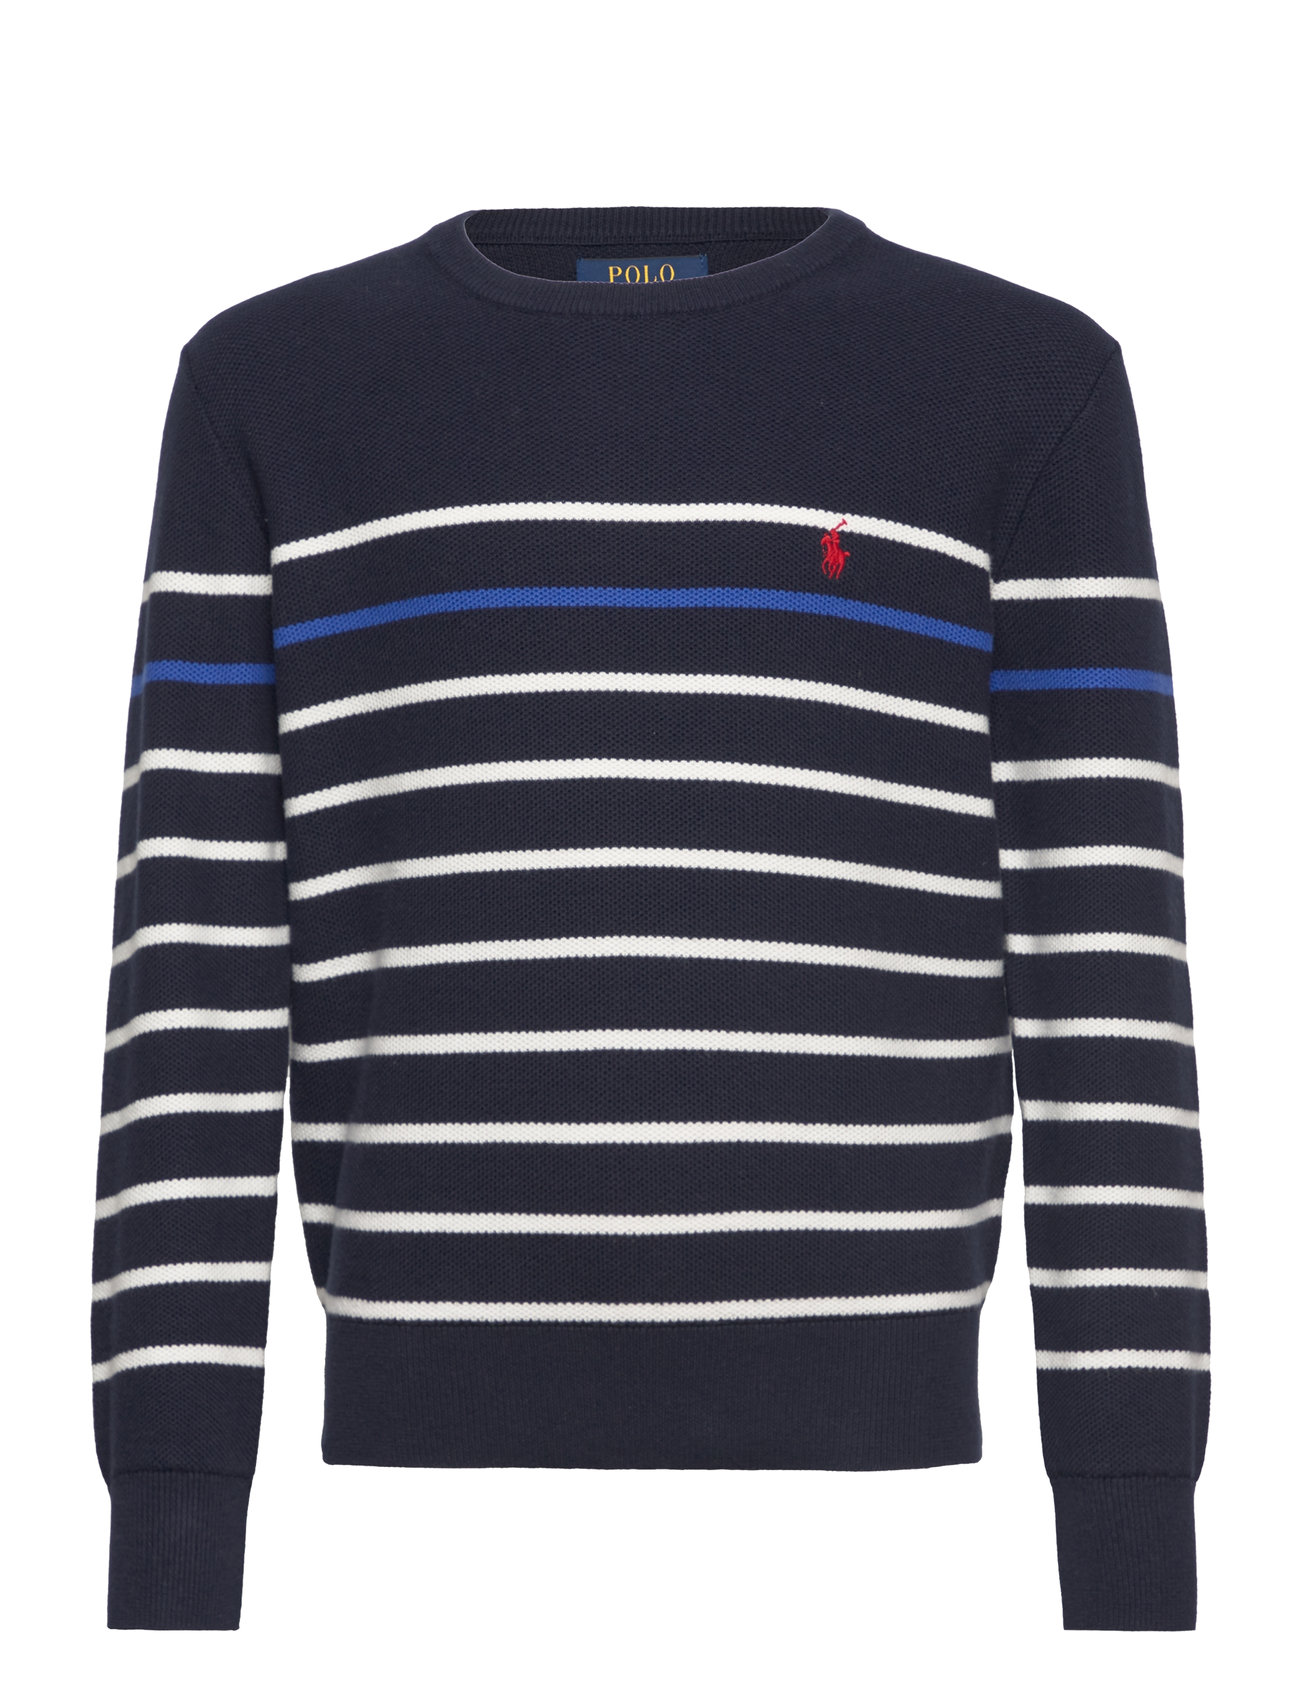 Striped Mesh-Knit Cotton Sweater Tops Knitwear Pullovers Navy Ralph Lauren Kids